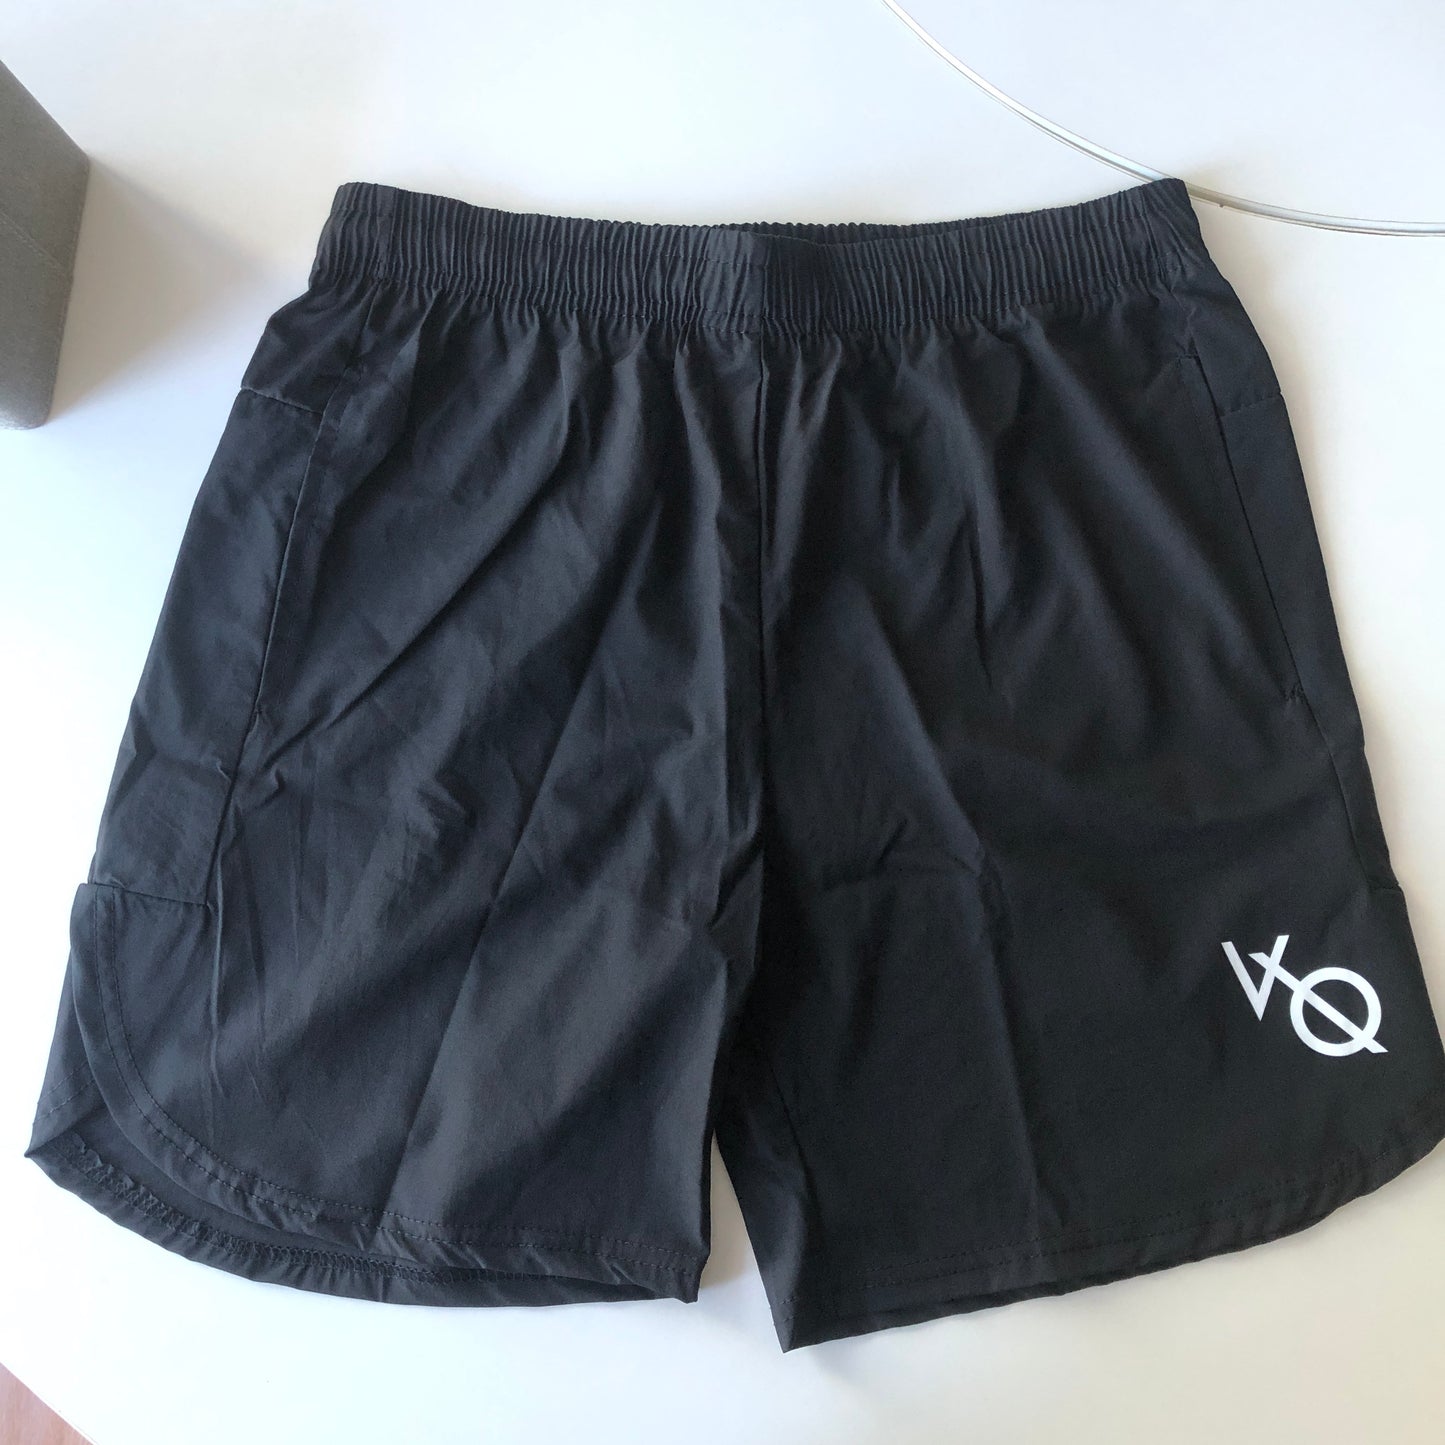 VO Quick Dry Gym/Running Men's Shorts - Black